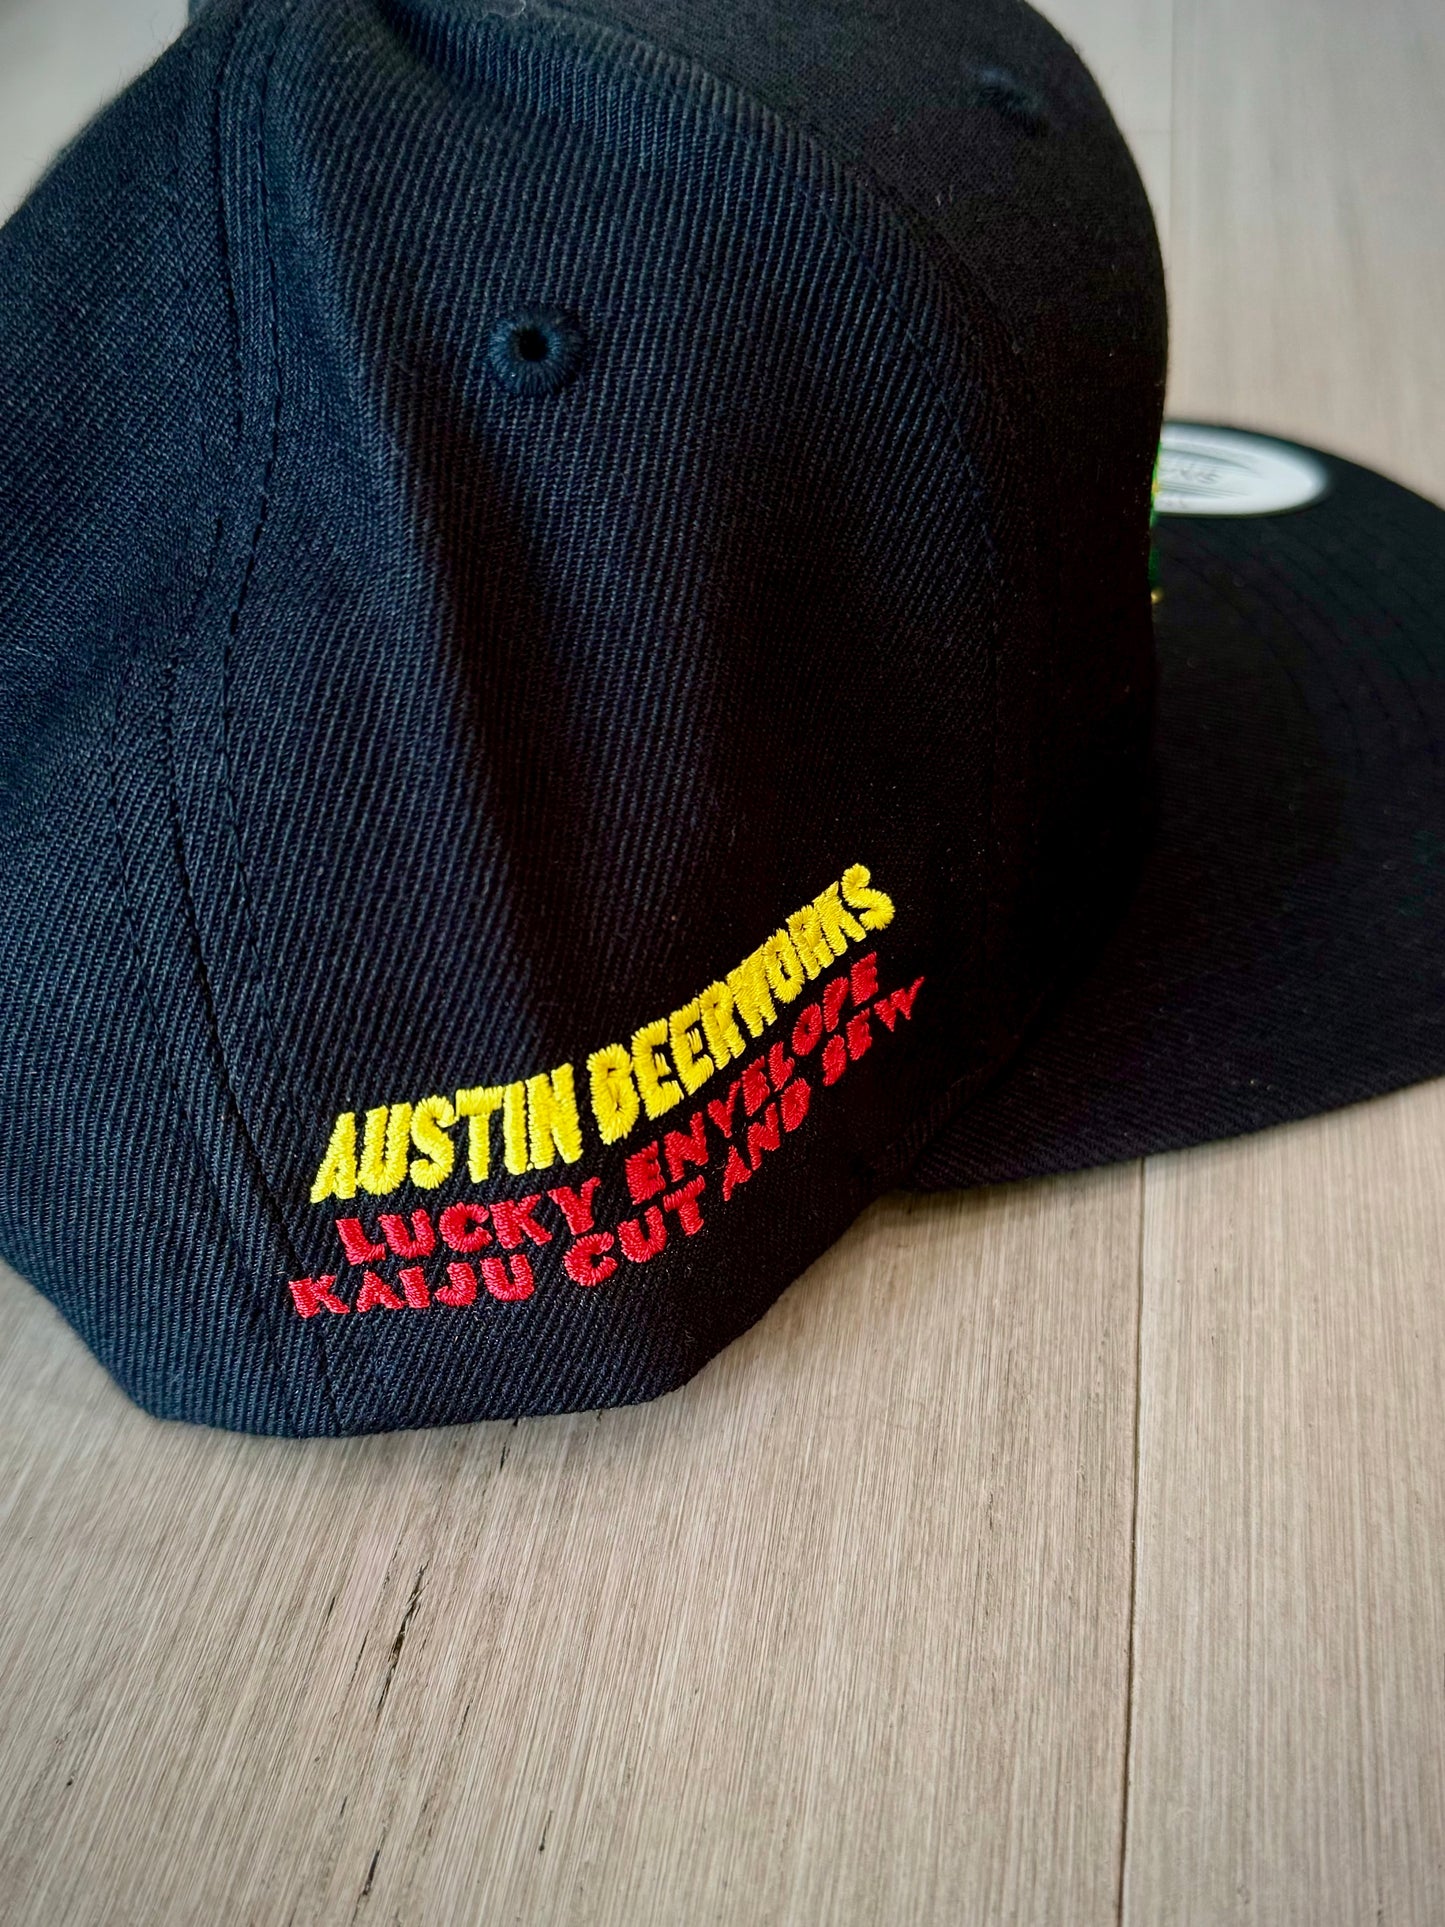 Kaiju Cut and Sew “Power & Elegance” Black Snapback Cap | Made in Austin, TX